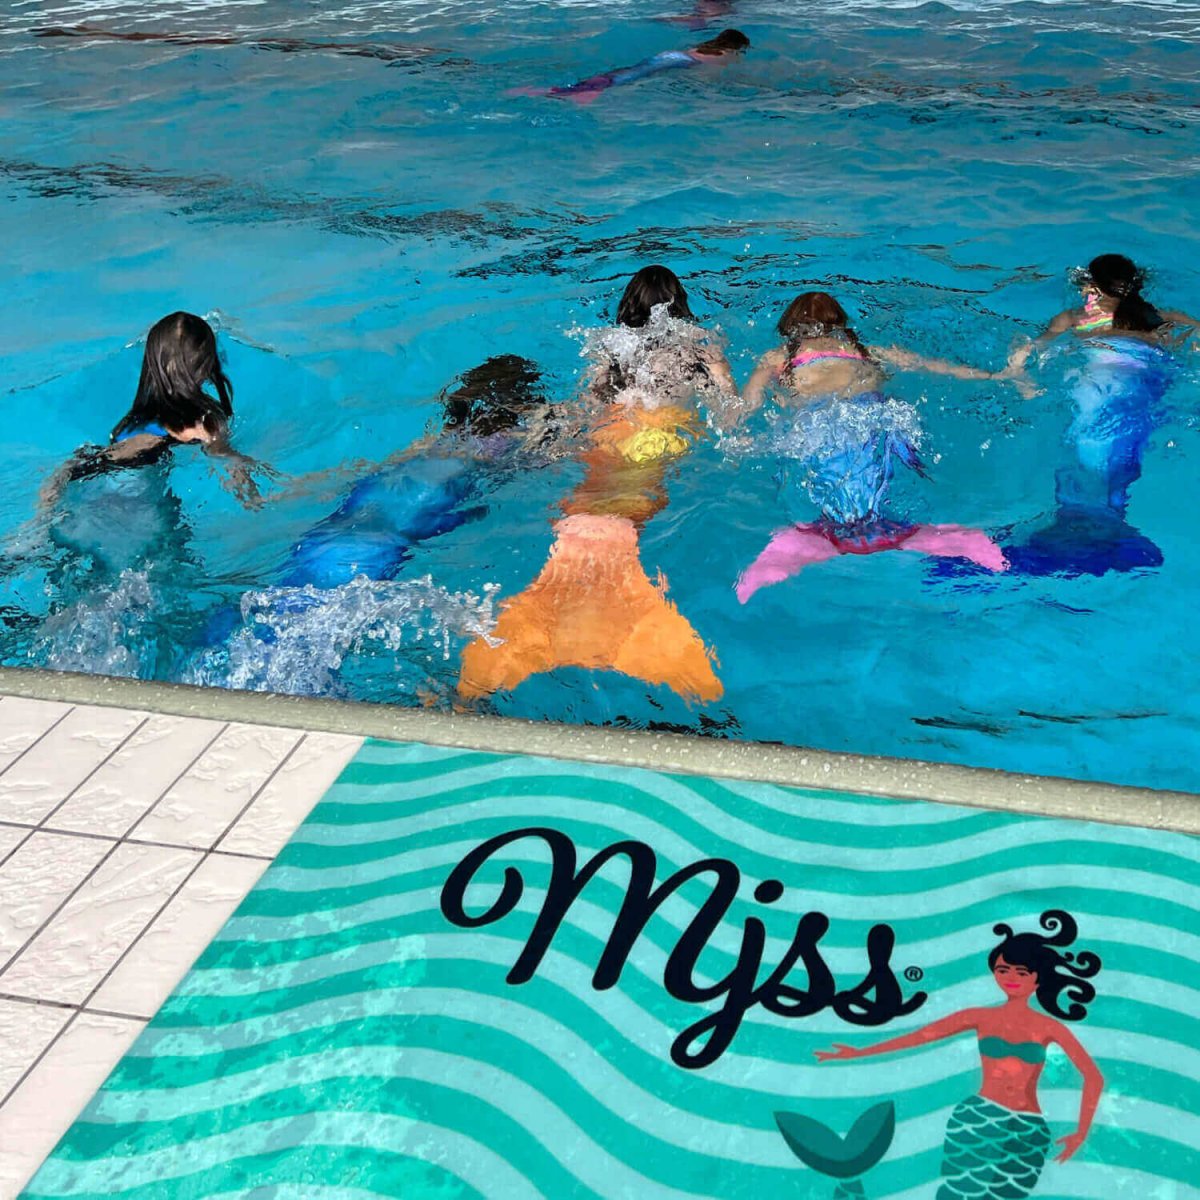 Kinderspielwoche: Meerjungfrauen Schwimmkurse im Hallenbad Wurmsbach - Meerjungfrauen Schwimmkurse an der Kinderspielwoche